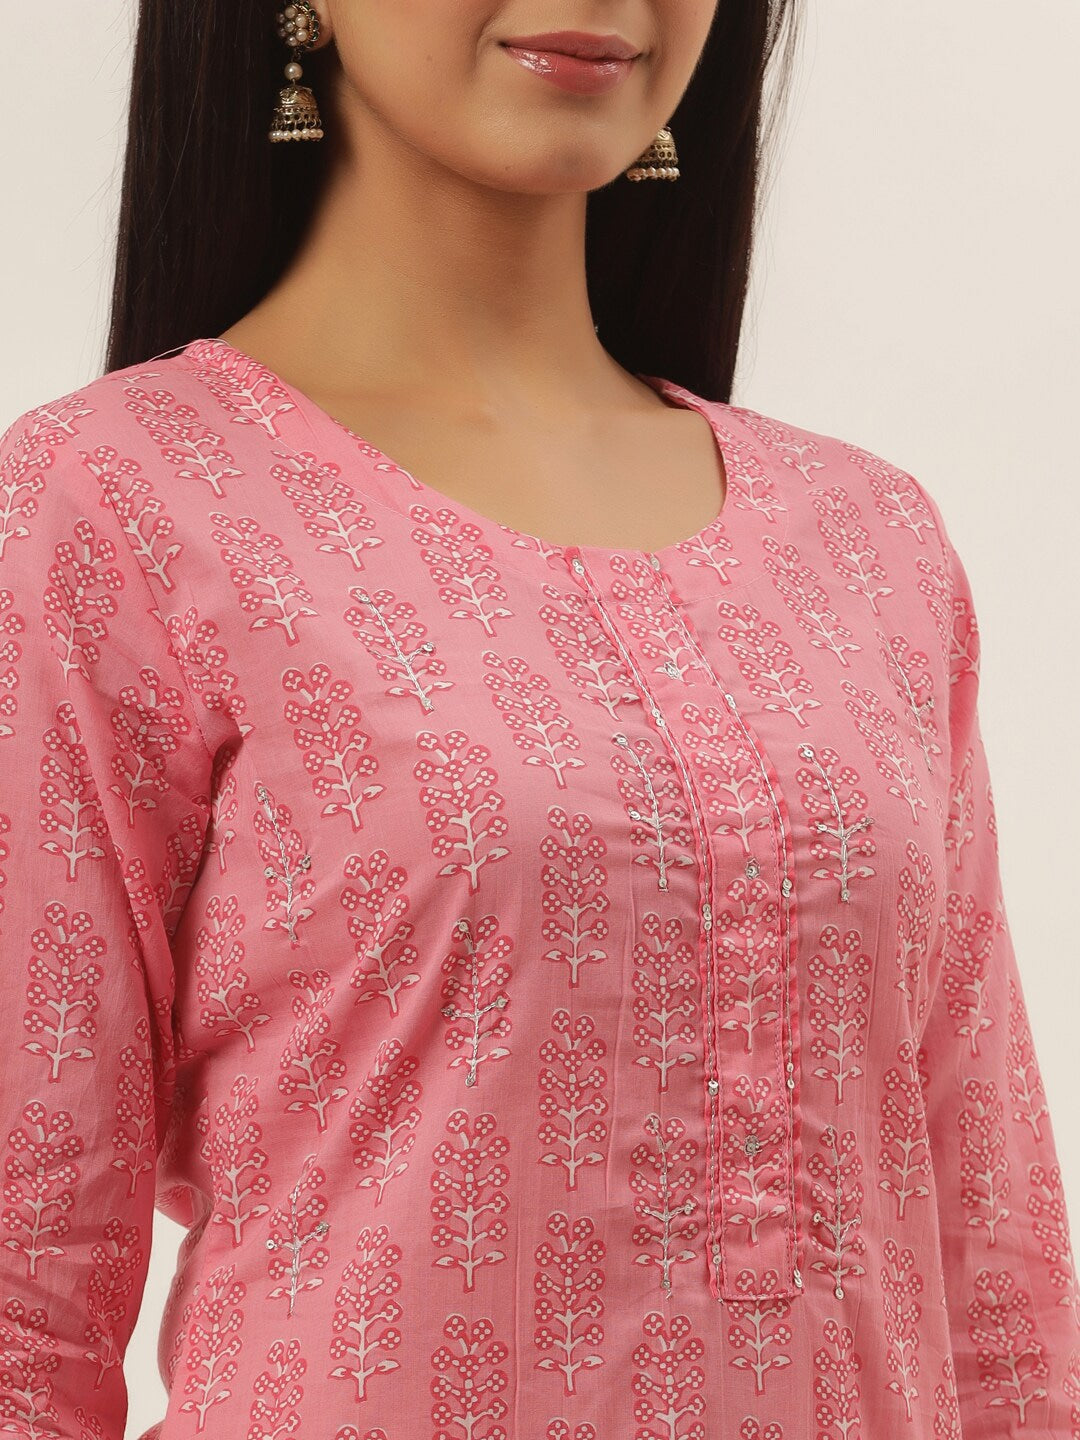 Pink Ethnic Motifs Cotton Dupatta Set-Yufta Store-4778SKDPKM